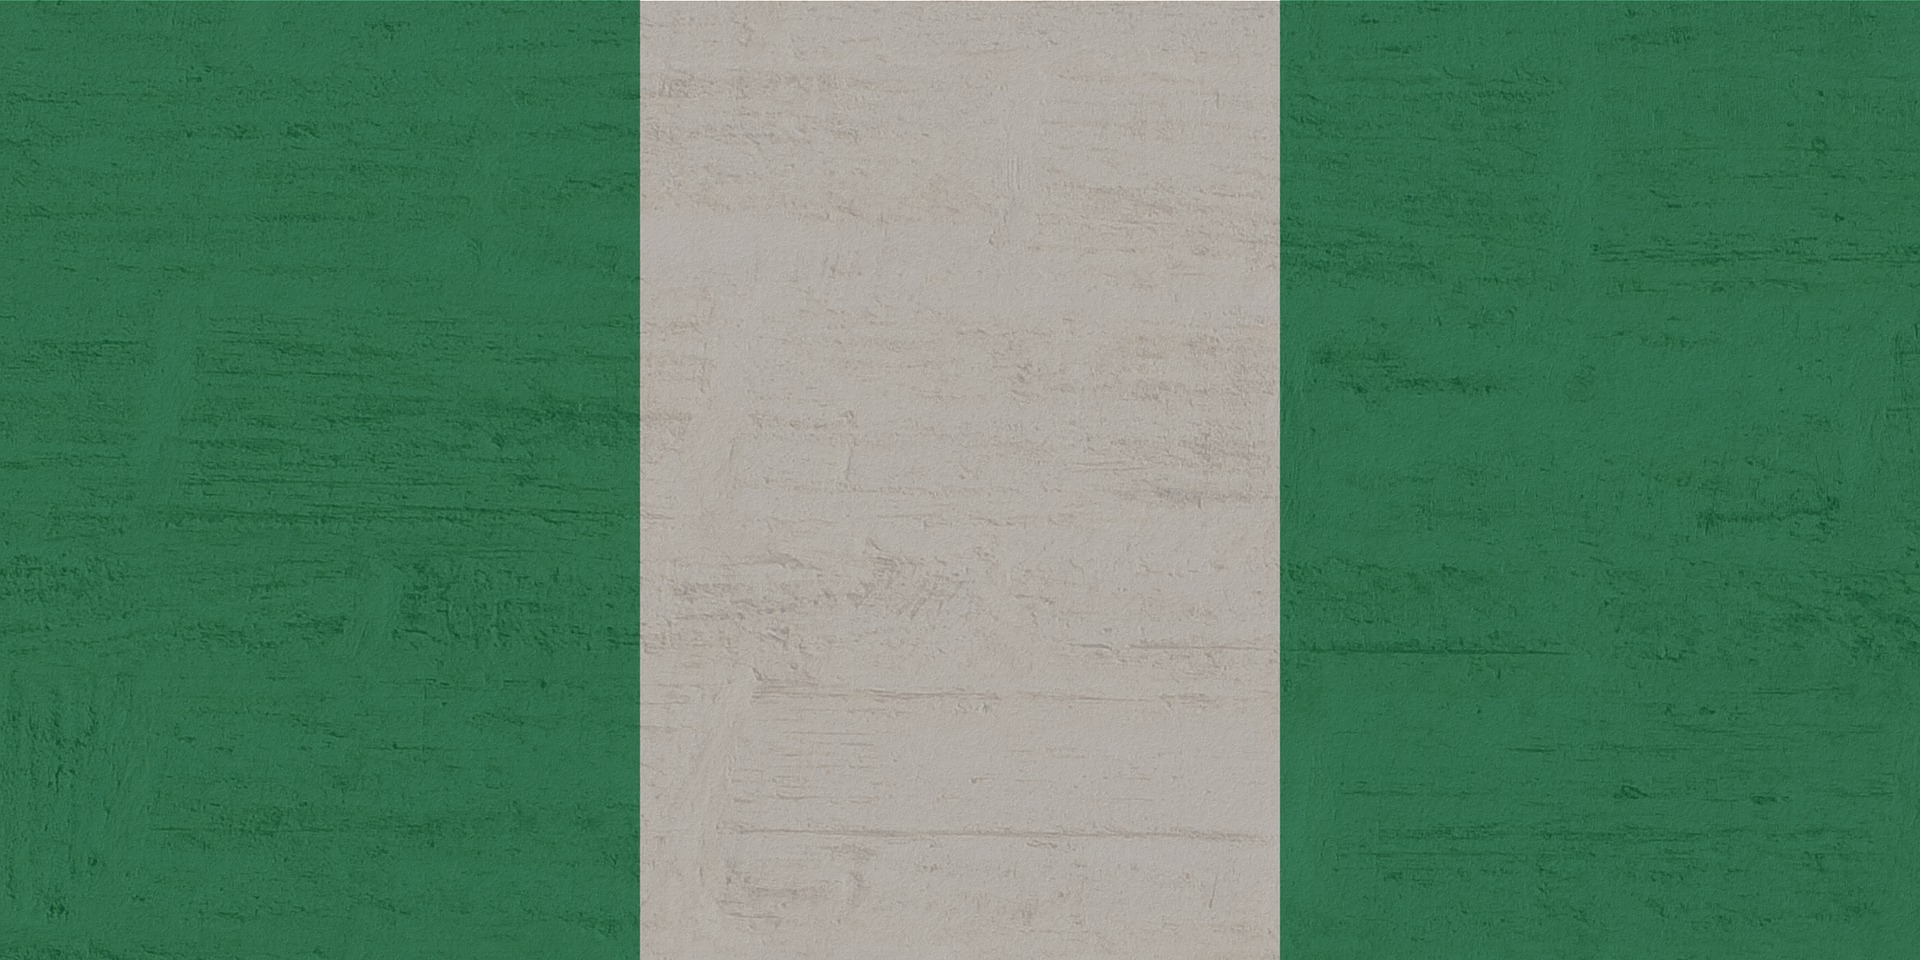 Nigerian flag (photo credit: Pixabay)